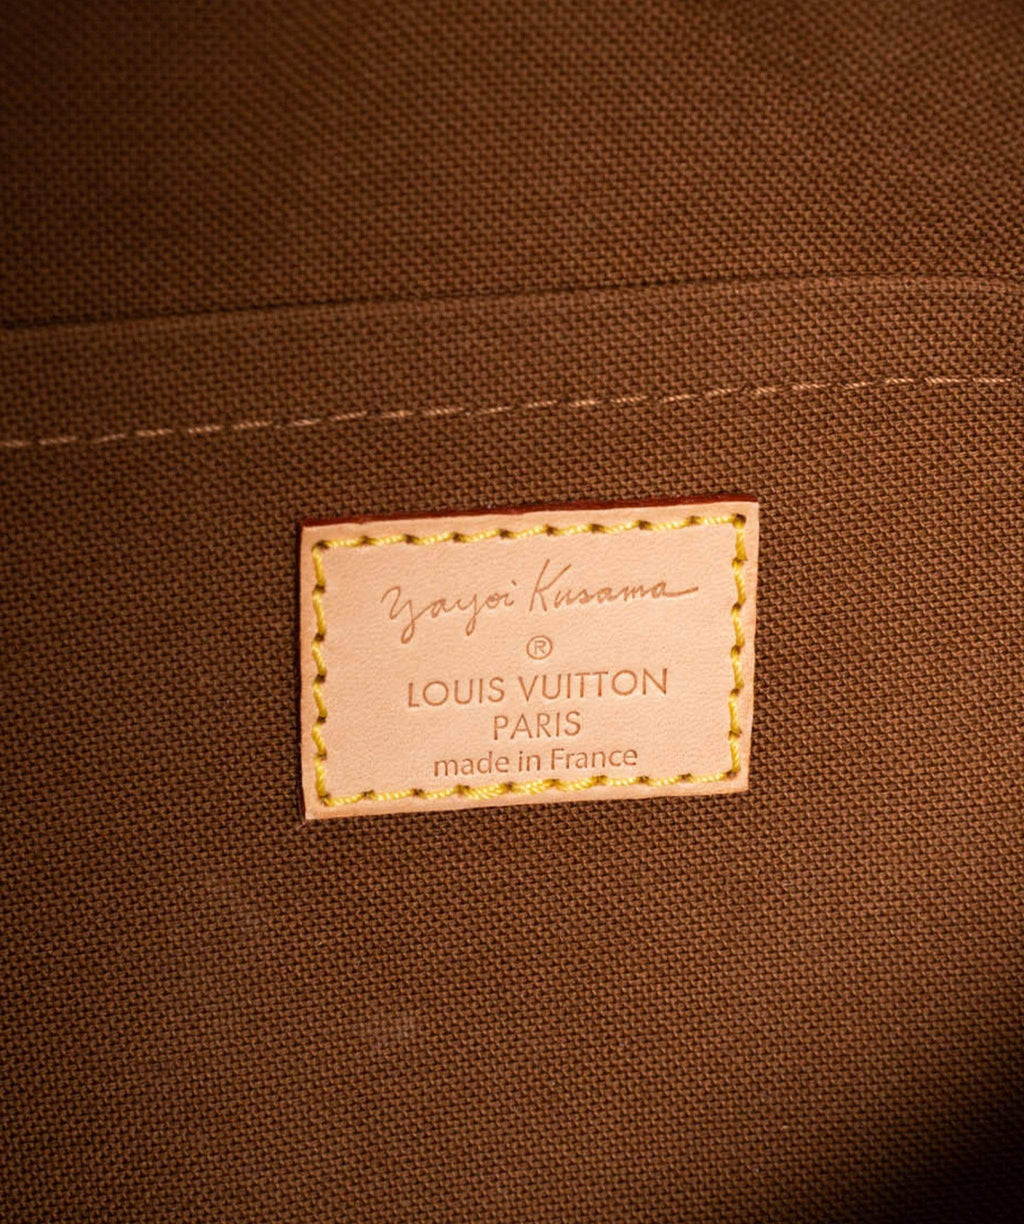 It's pumpkin season 🧡 Louis Vuitton x Yayoi Kusama's collection is growing  on me 🤔